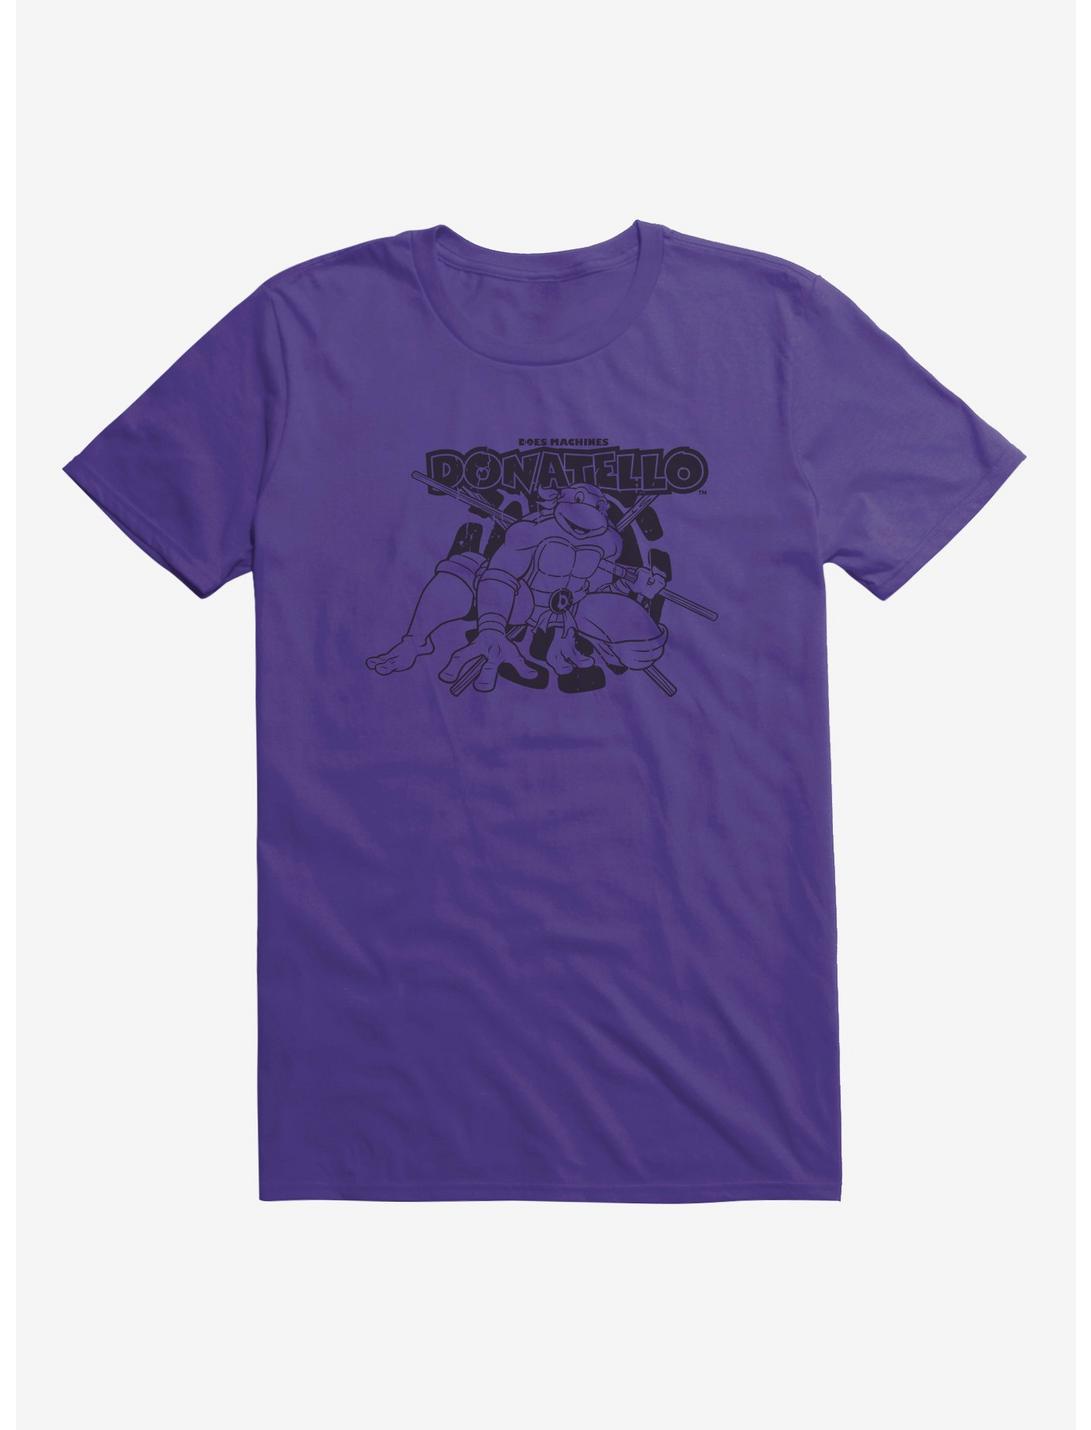 Teenage Mutant Ninja Turtles Donatello Does Machines Pose Purple T-Shirt, , hi-res